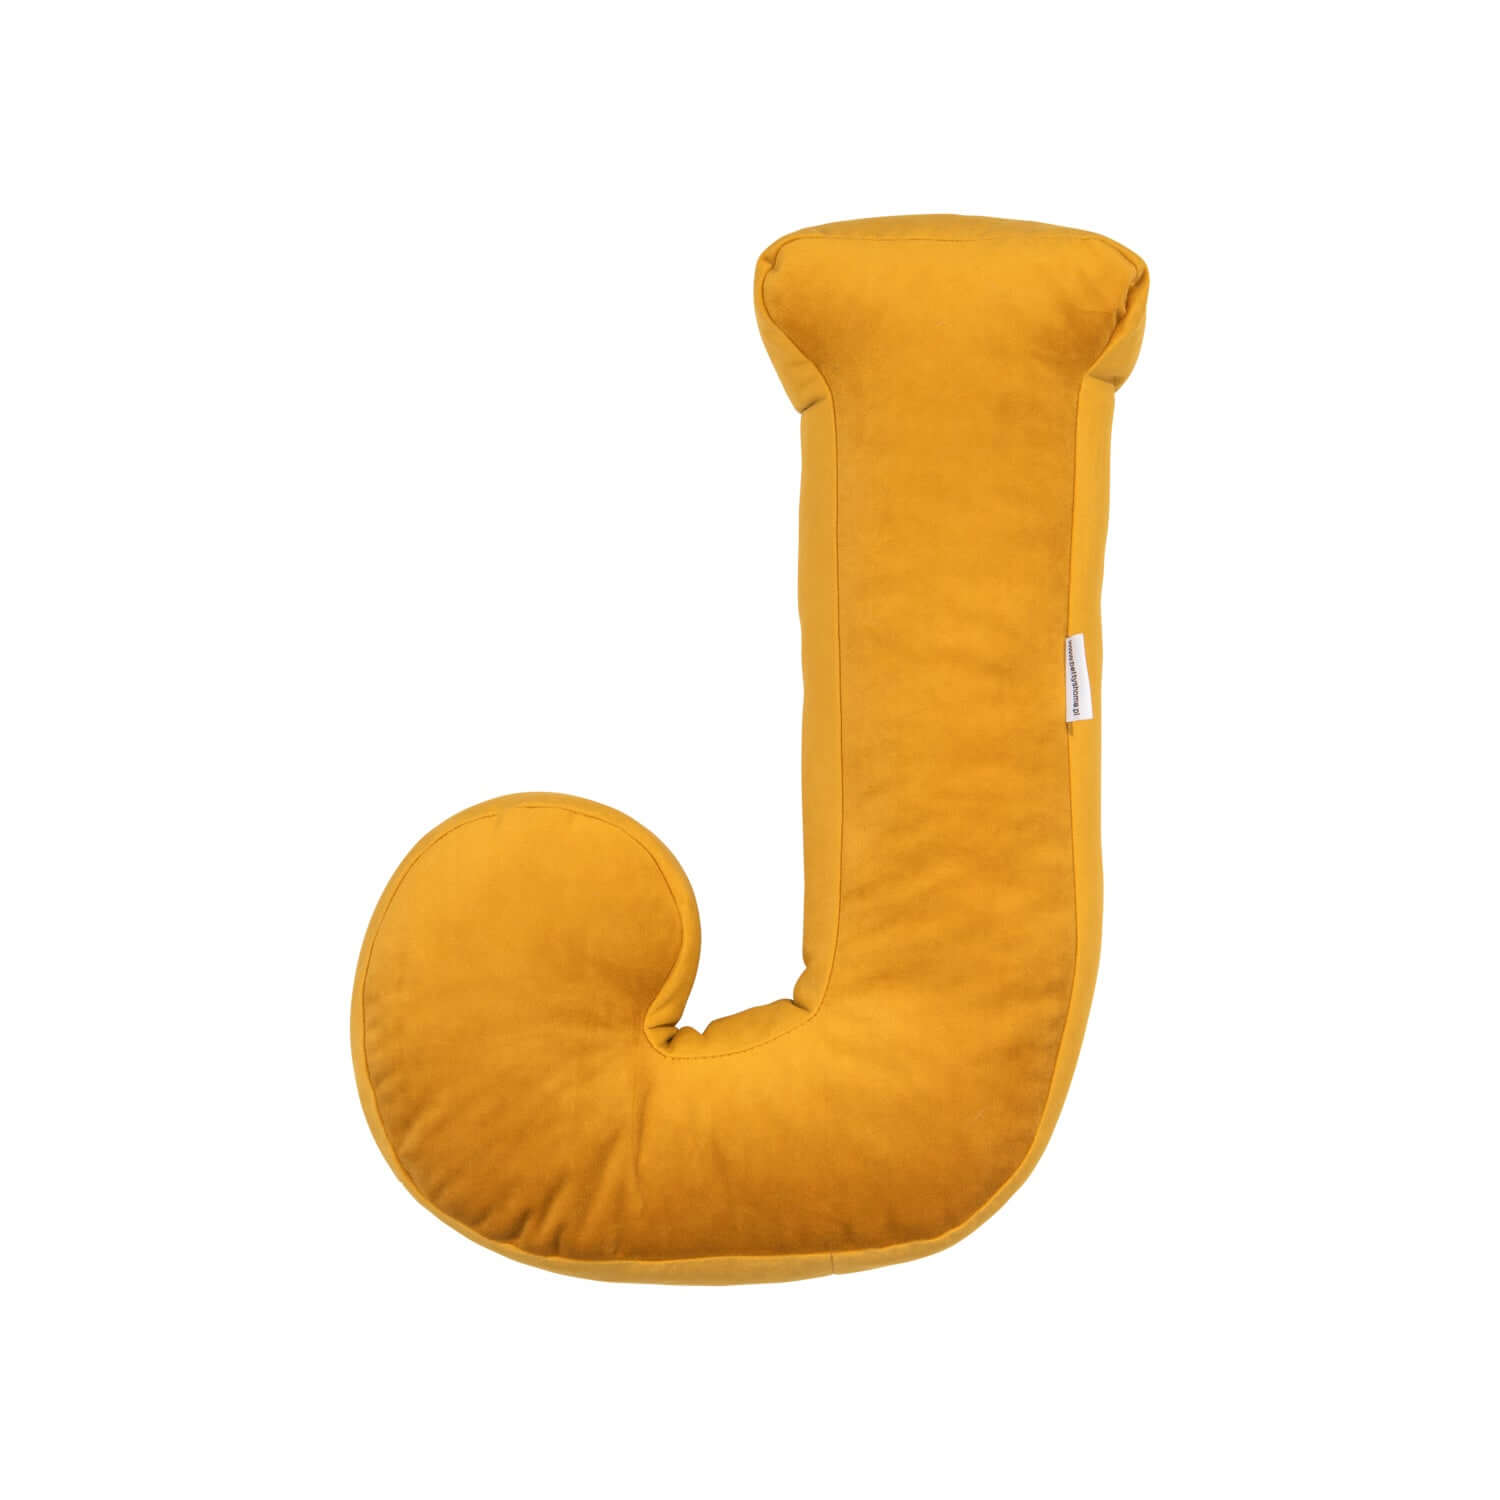 Poduszka literka welurowa J żółta od Bettys Home